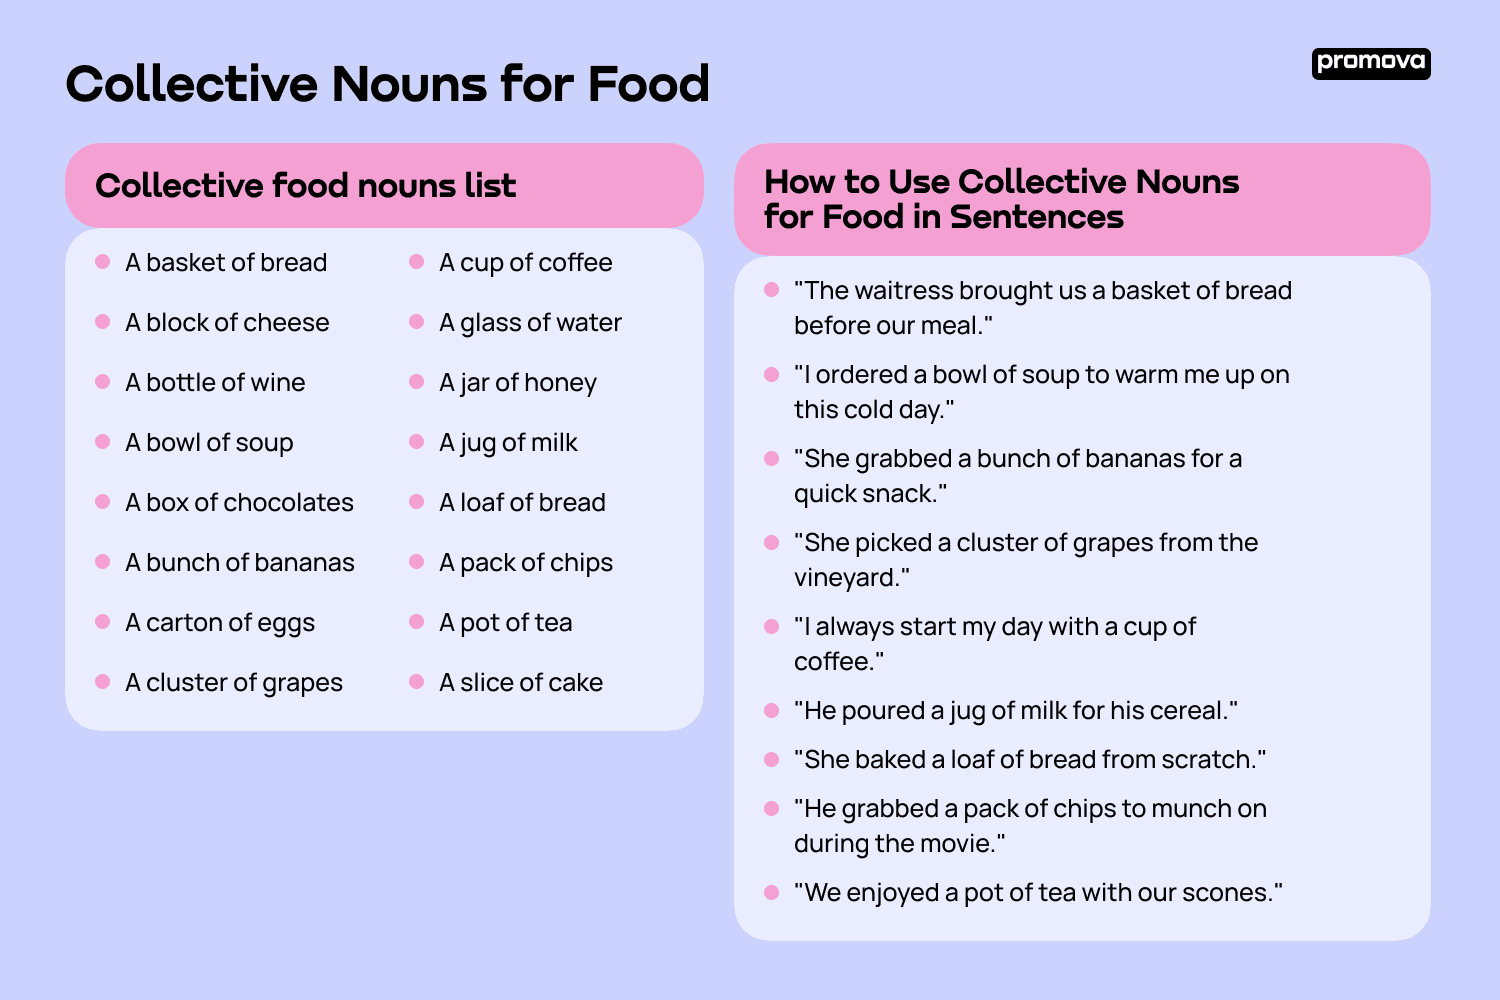 Collective food nouns list